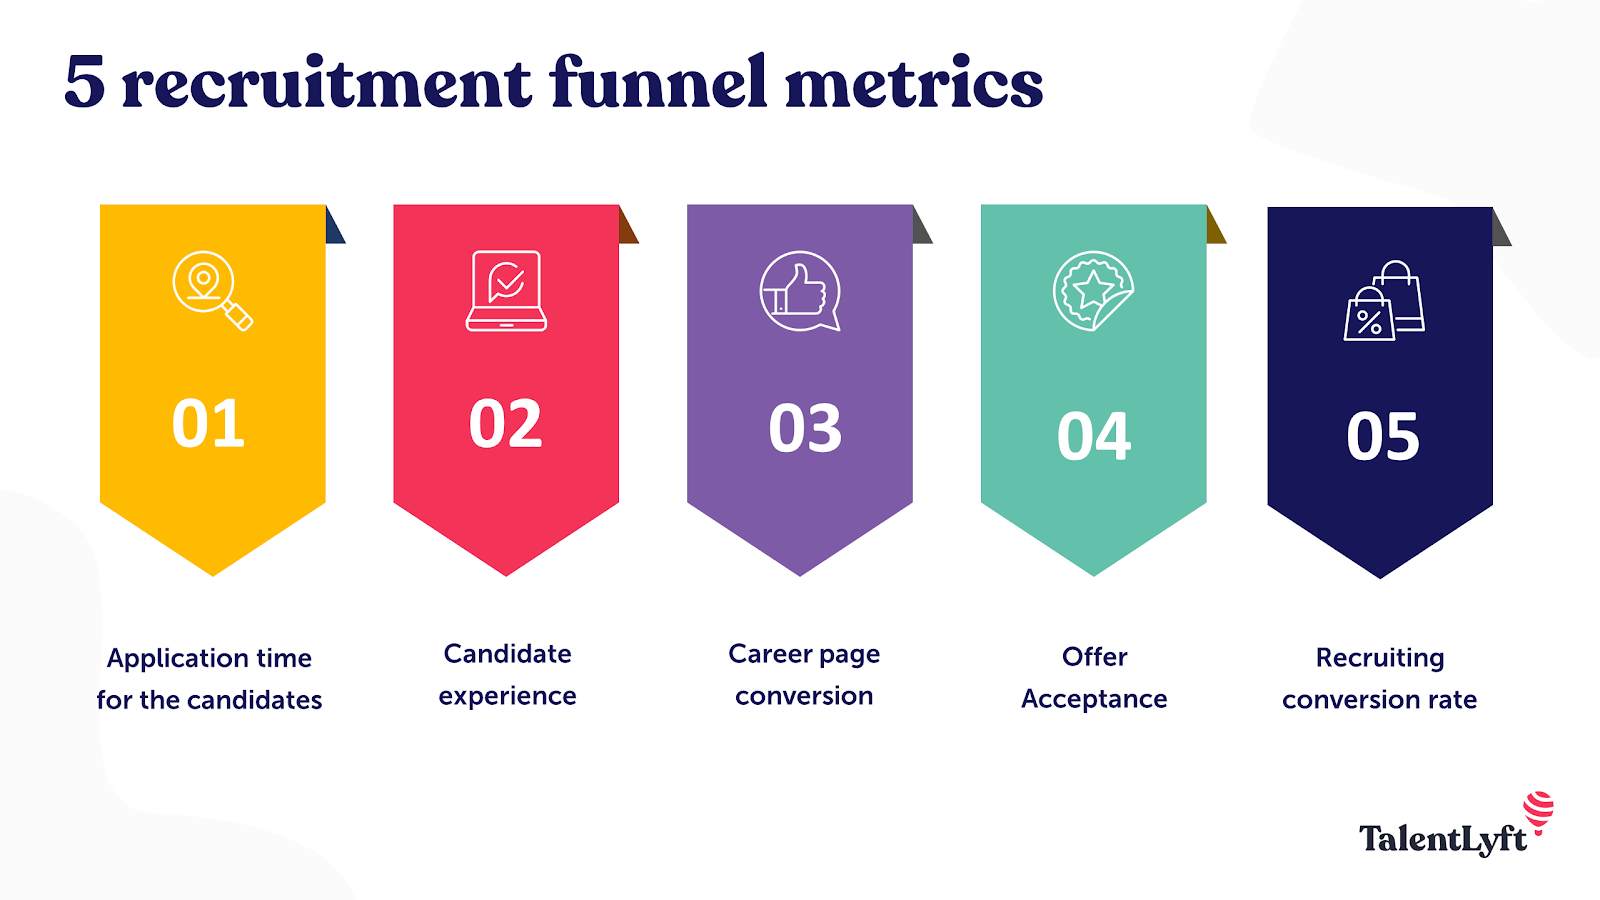 Recruitment funnel metrics